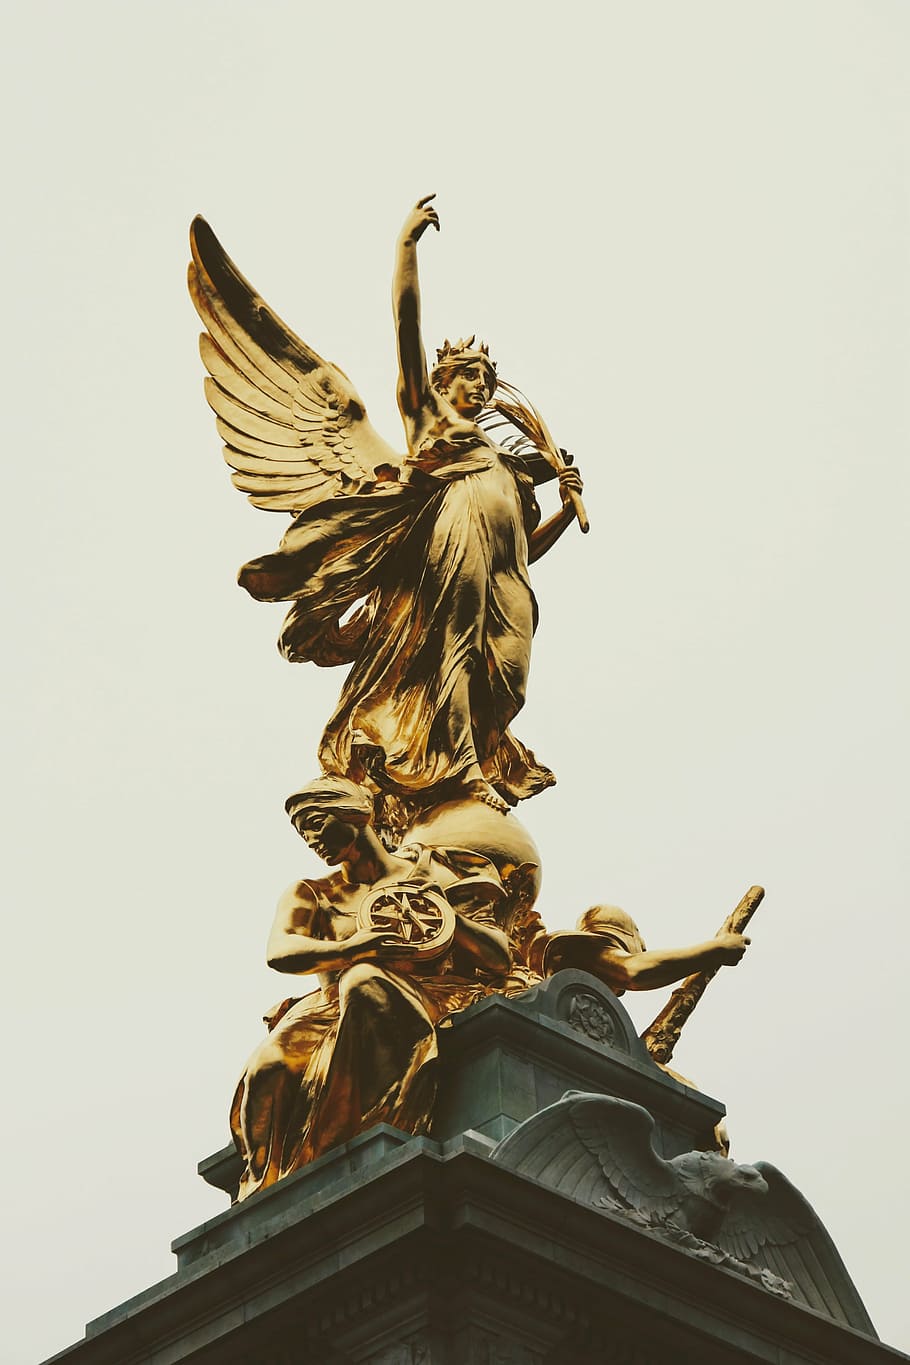 gold angel statue, london, buckingham palace, detail, united kingdom, palace, golden, sculpture, statue, landmark